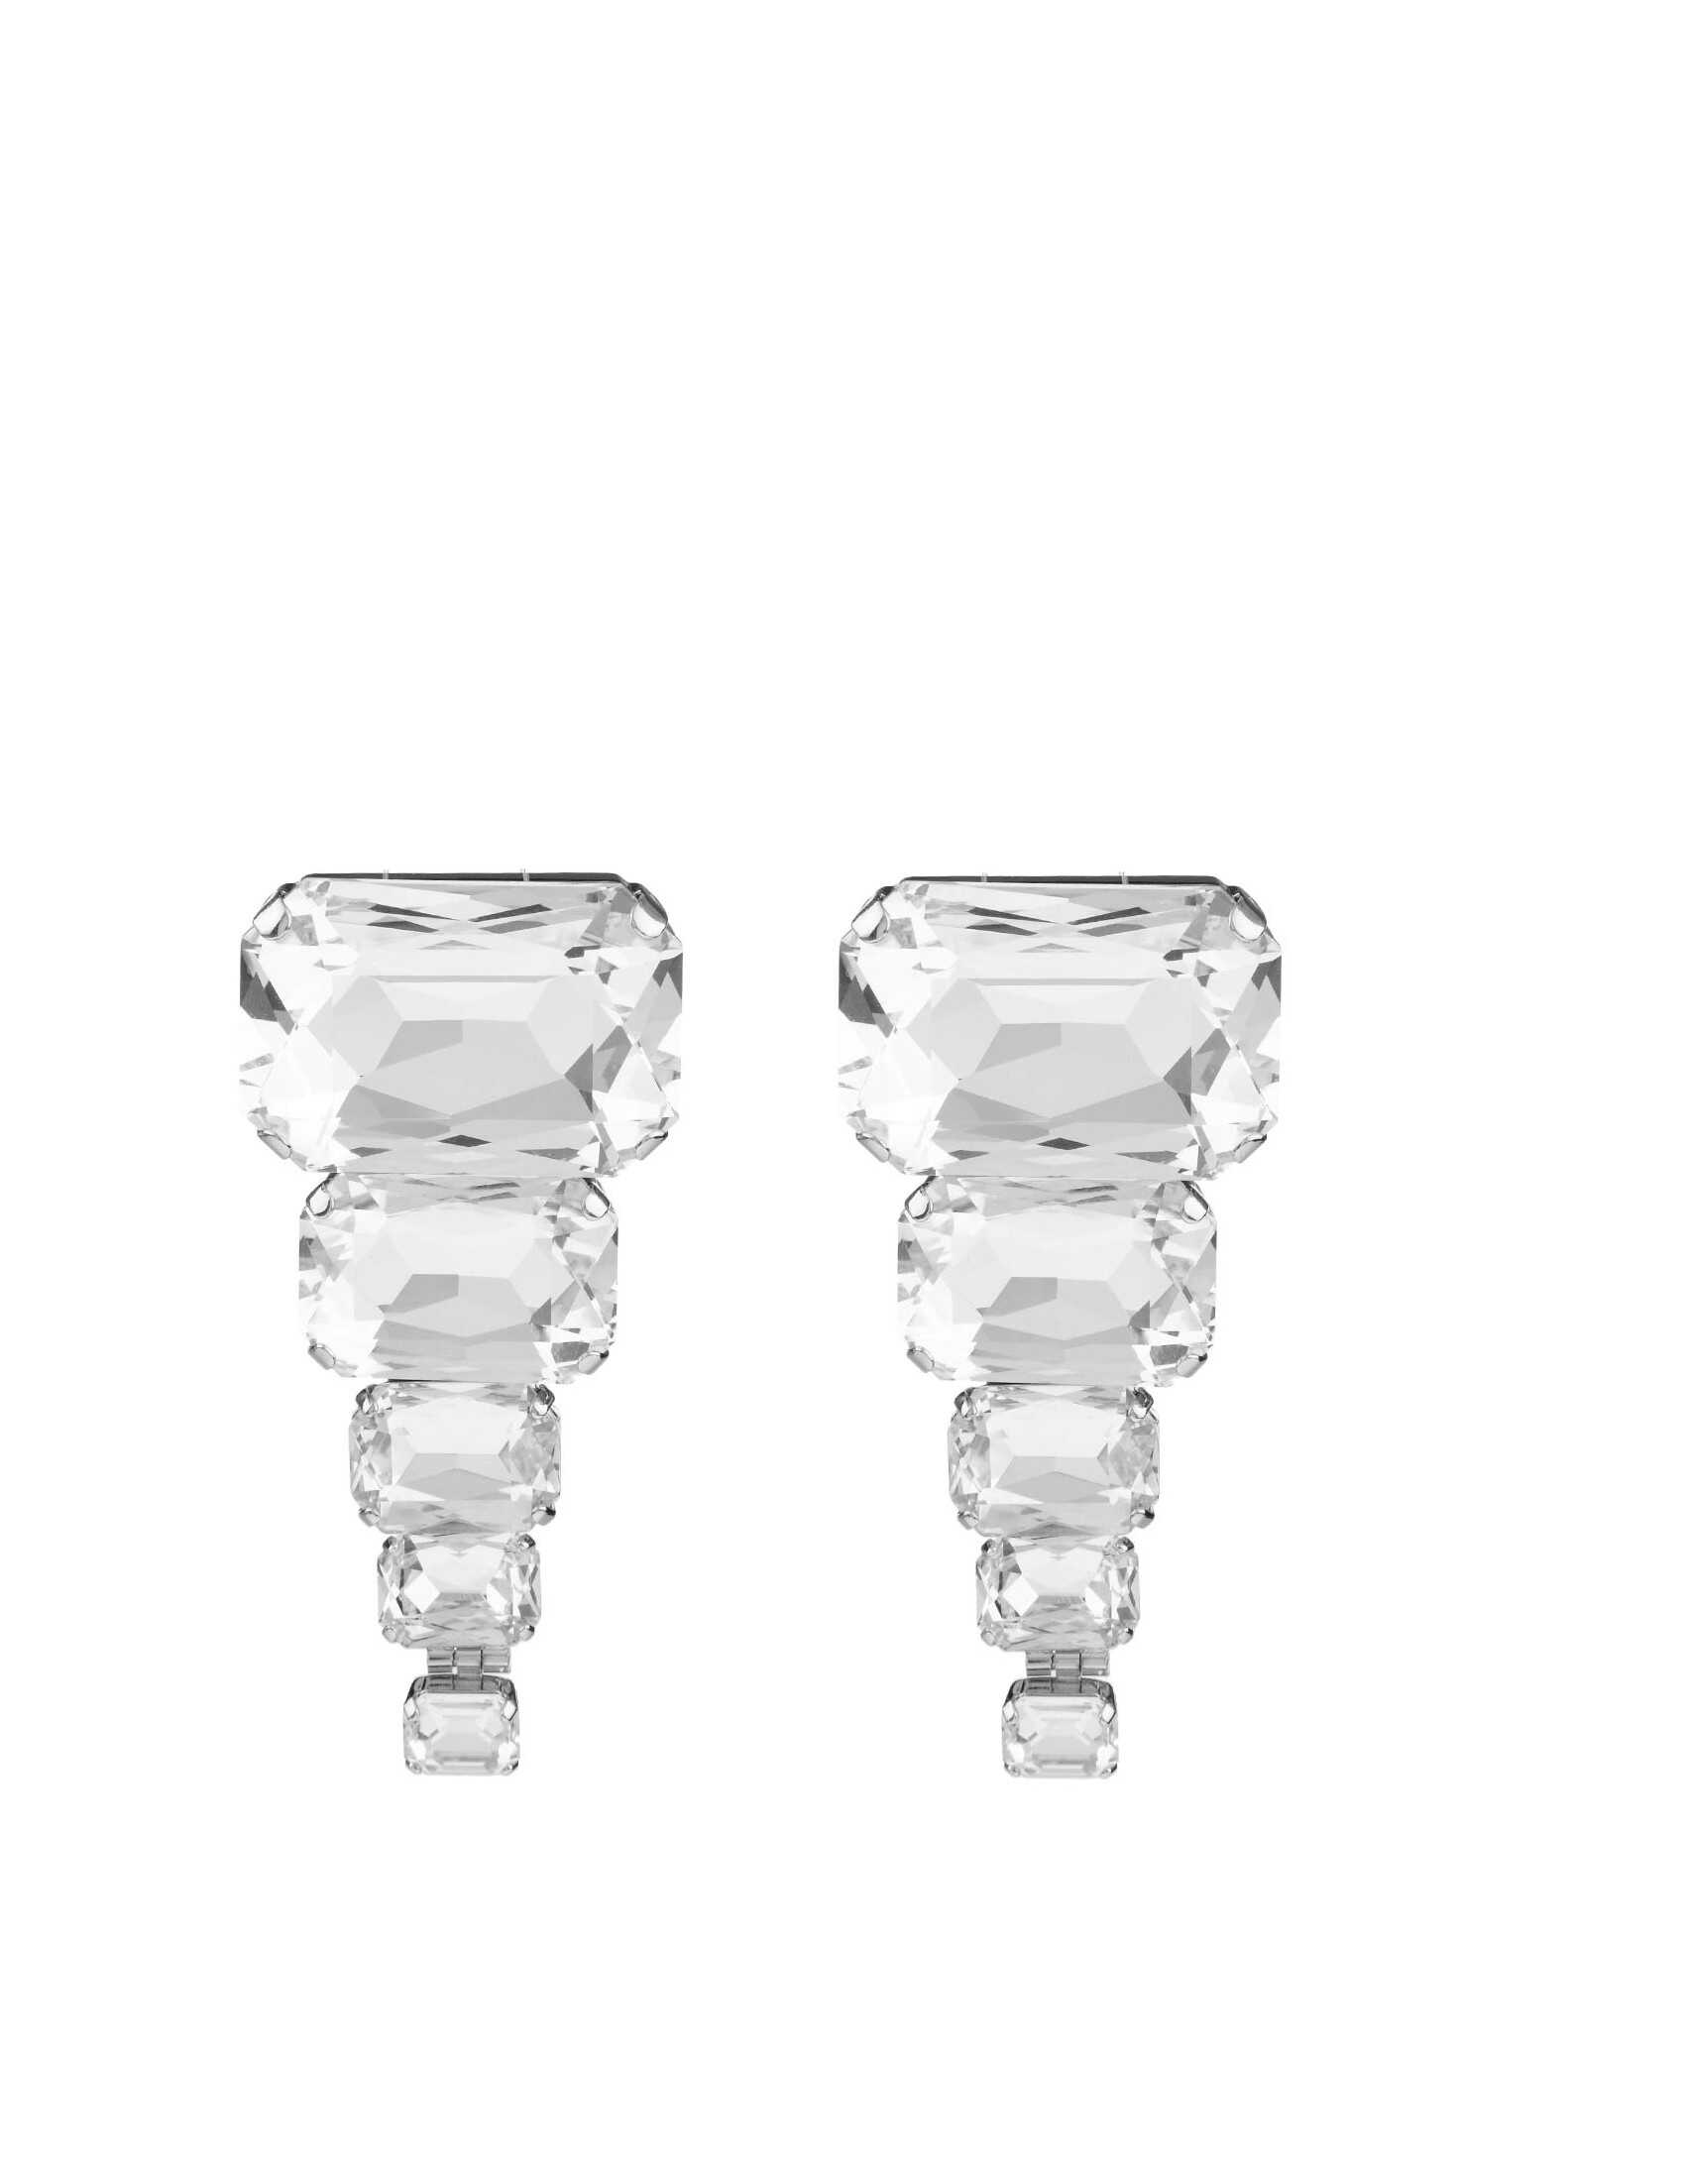 Balmain Balmain xl earrings in octagonal crystals N/A